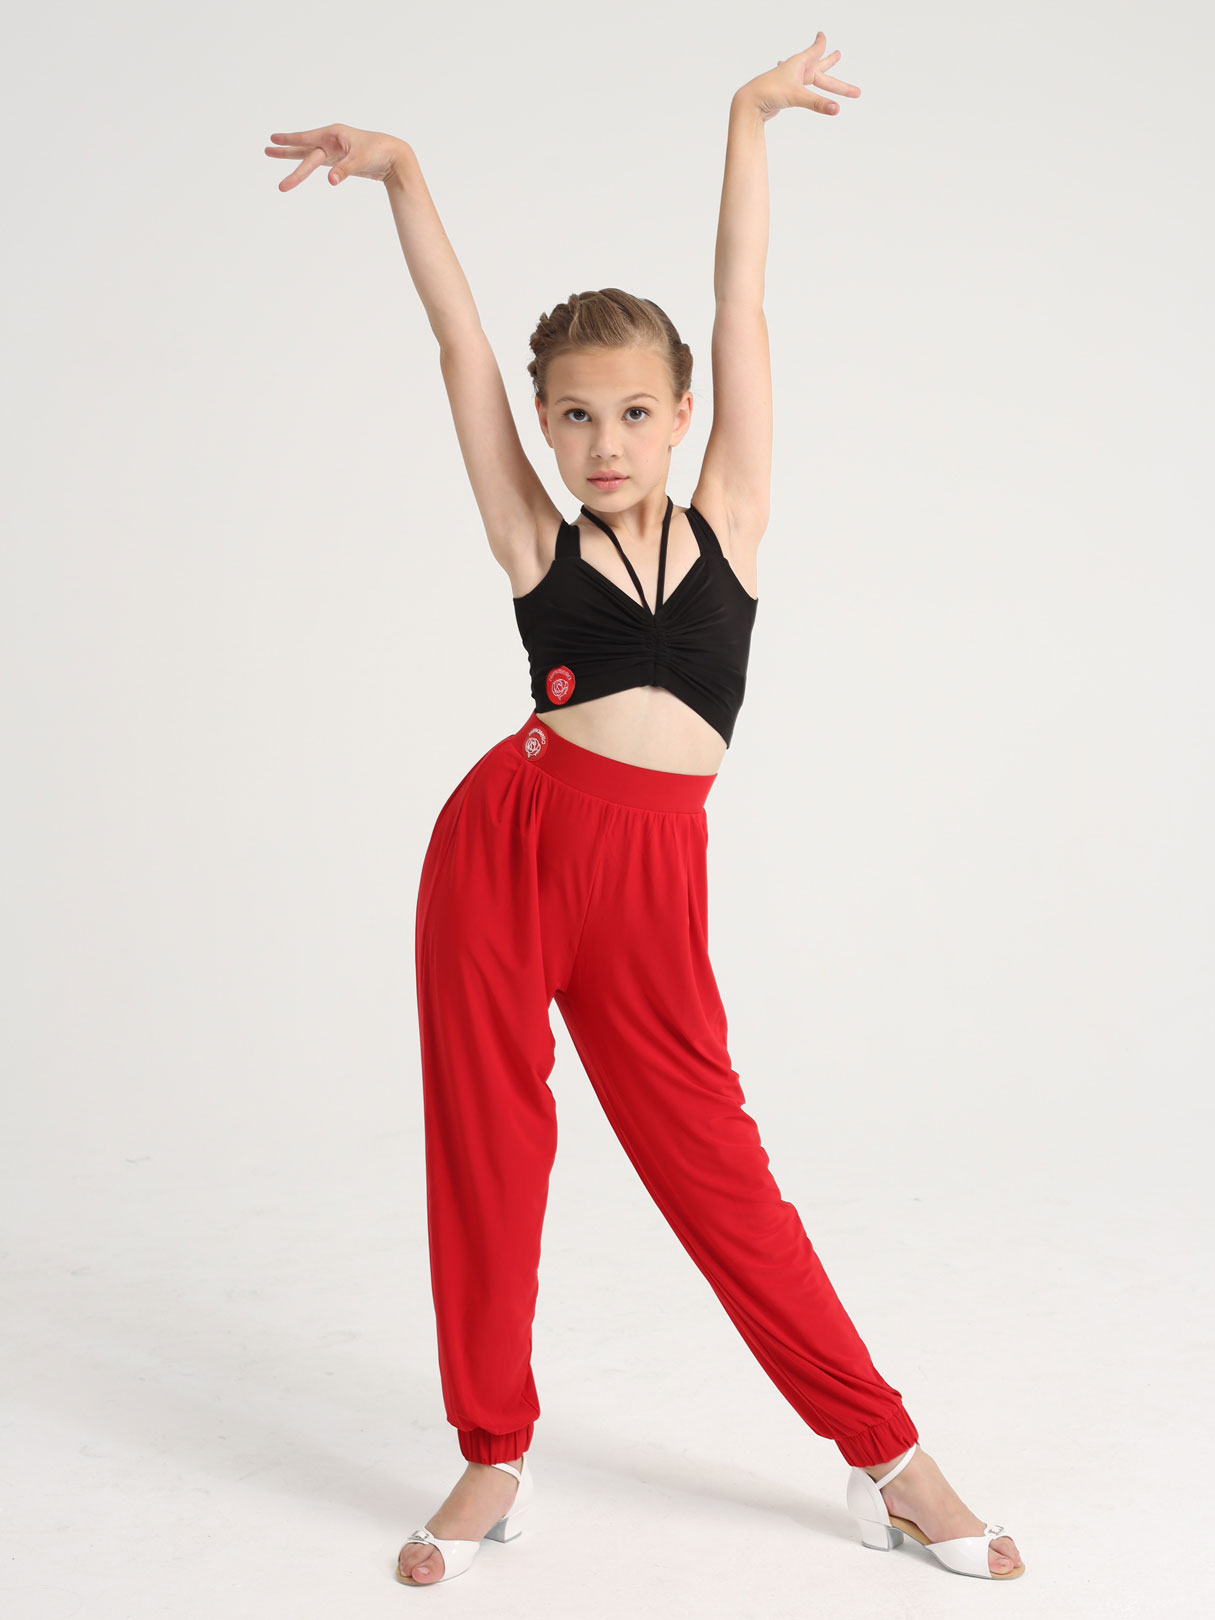 Leggings for ballroom dancing - Buy in the Primabella online store